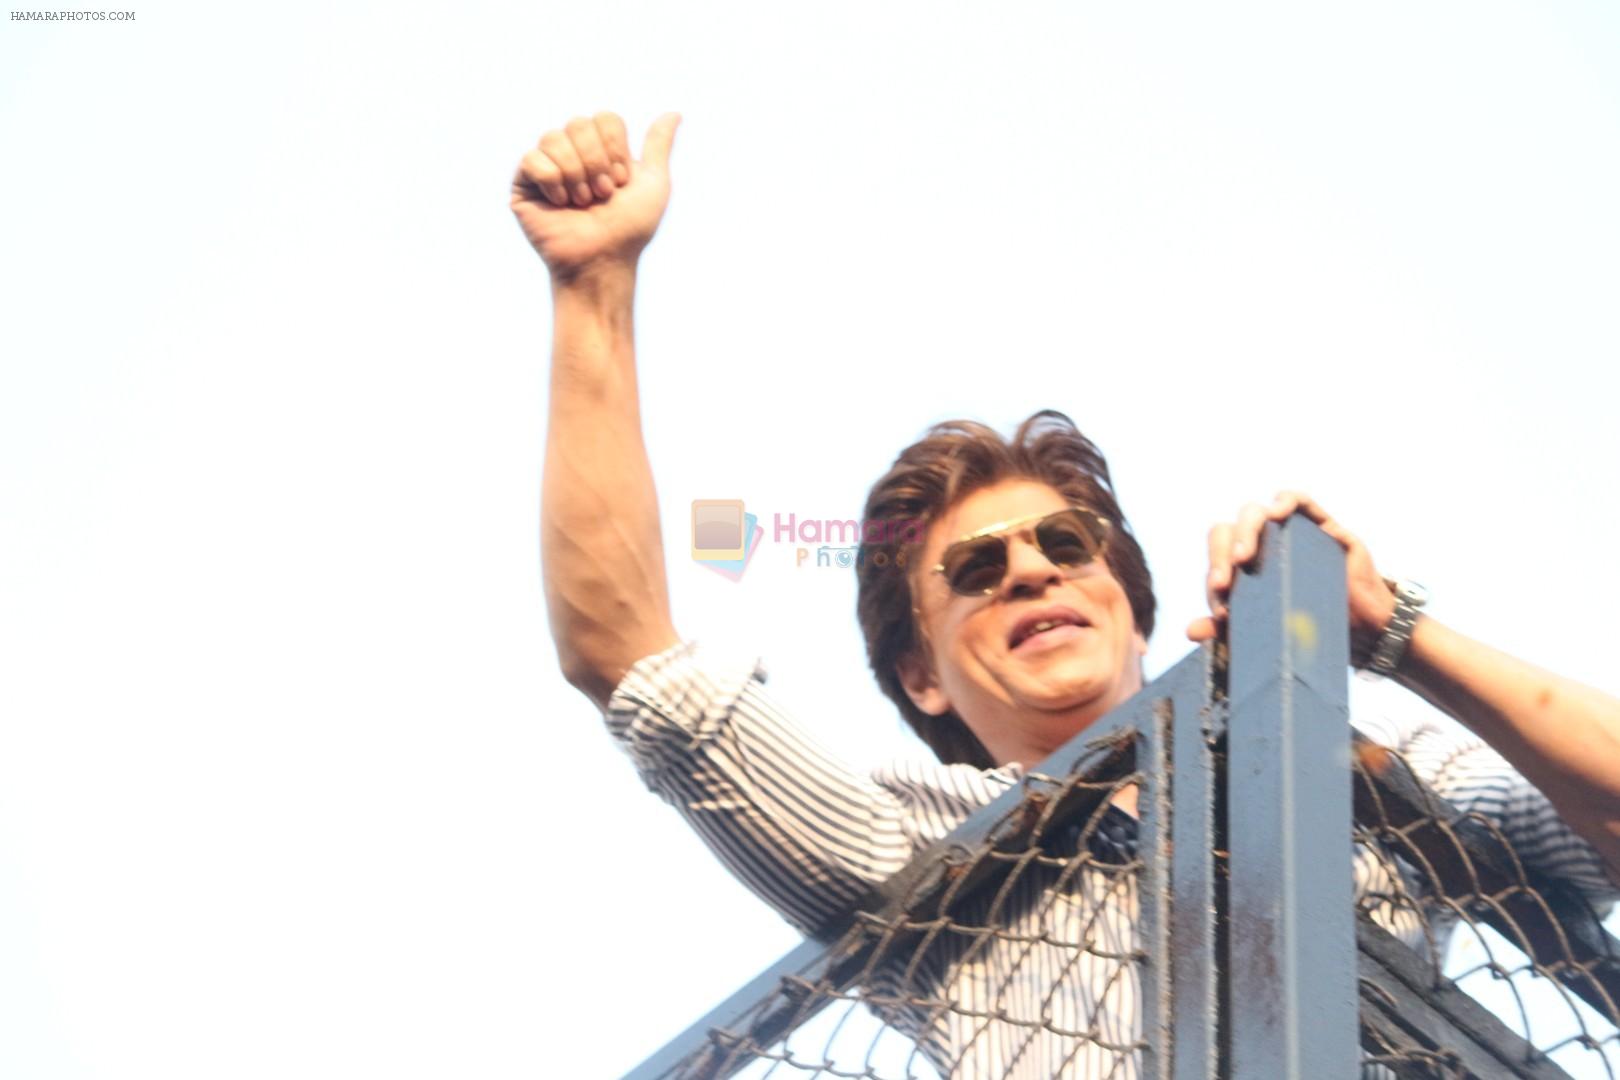 Shah Rukh Khan's 52nd Birthday Celebration With Fans on 2nd Nov 2017